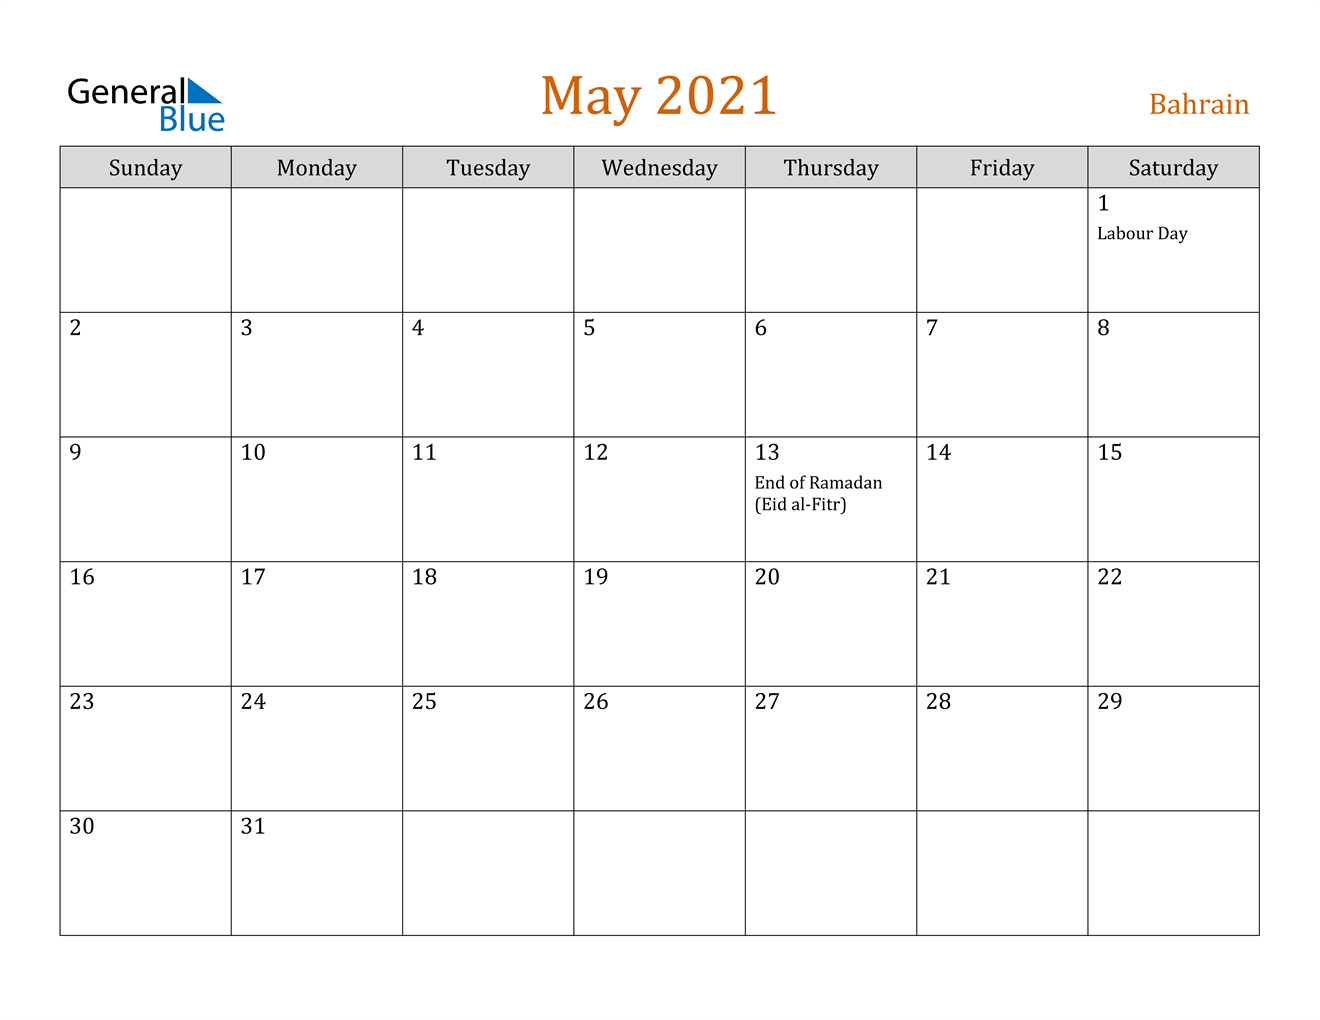 May 2021 Calendar - Bahrain